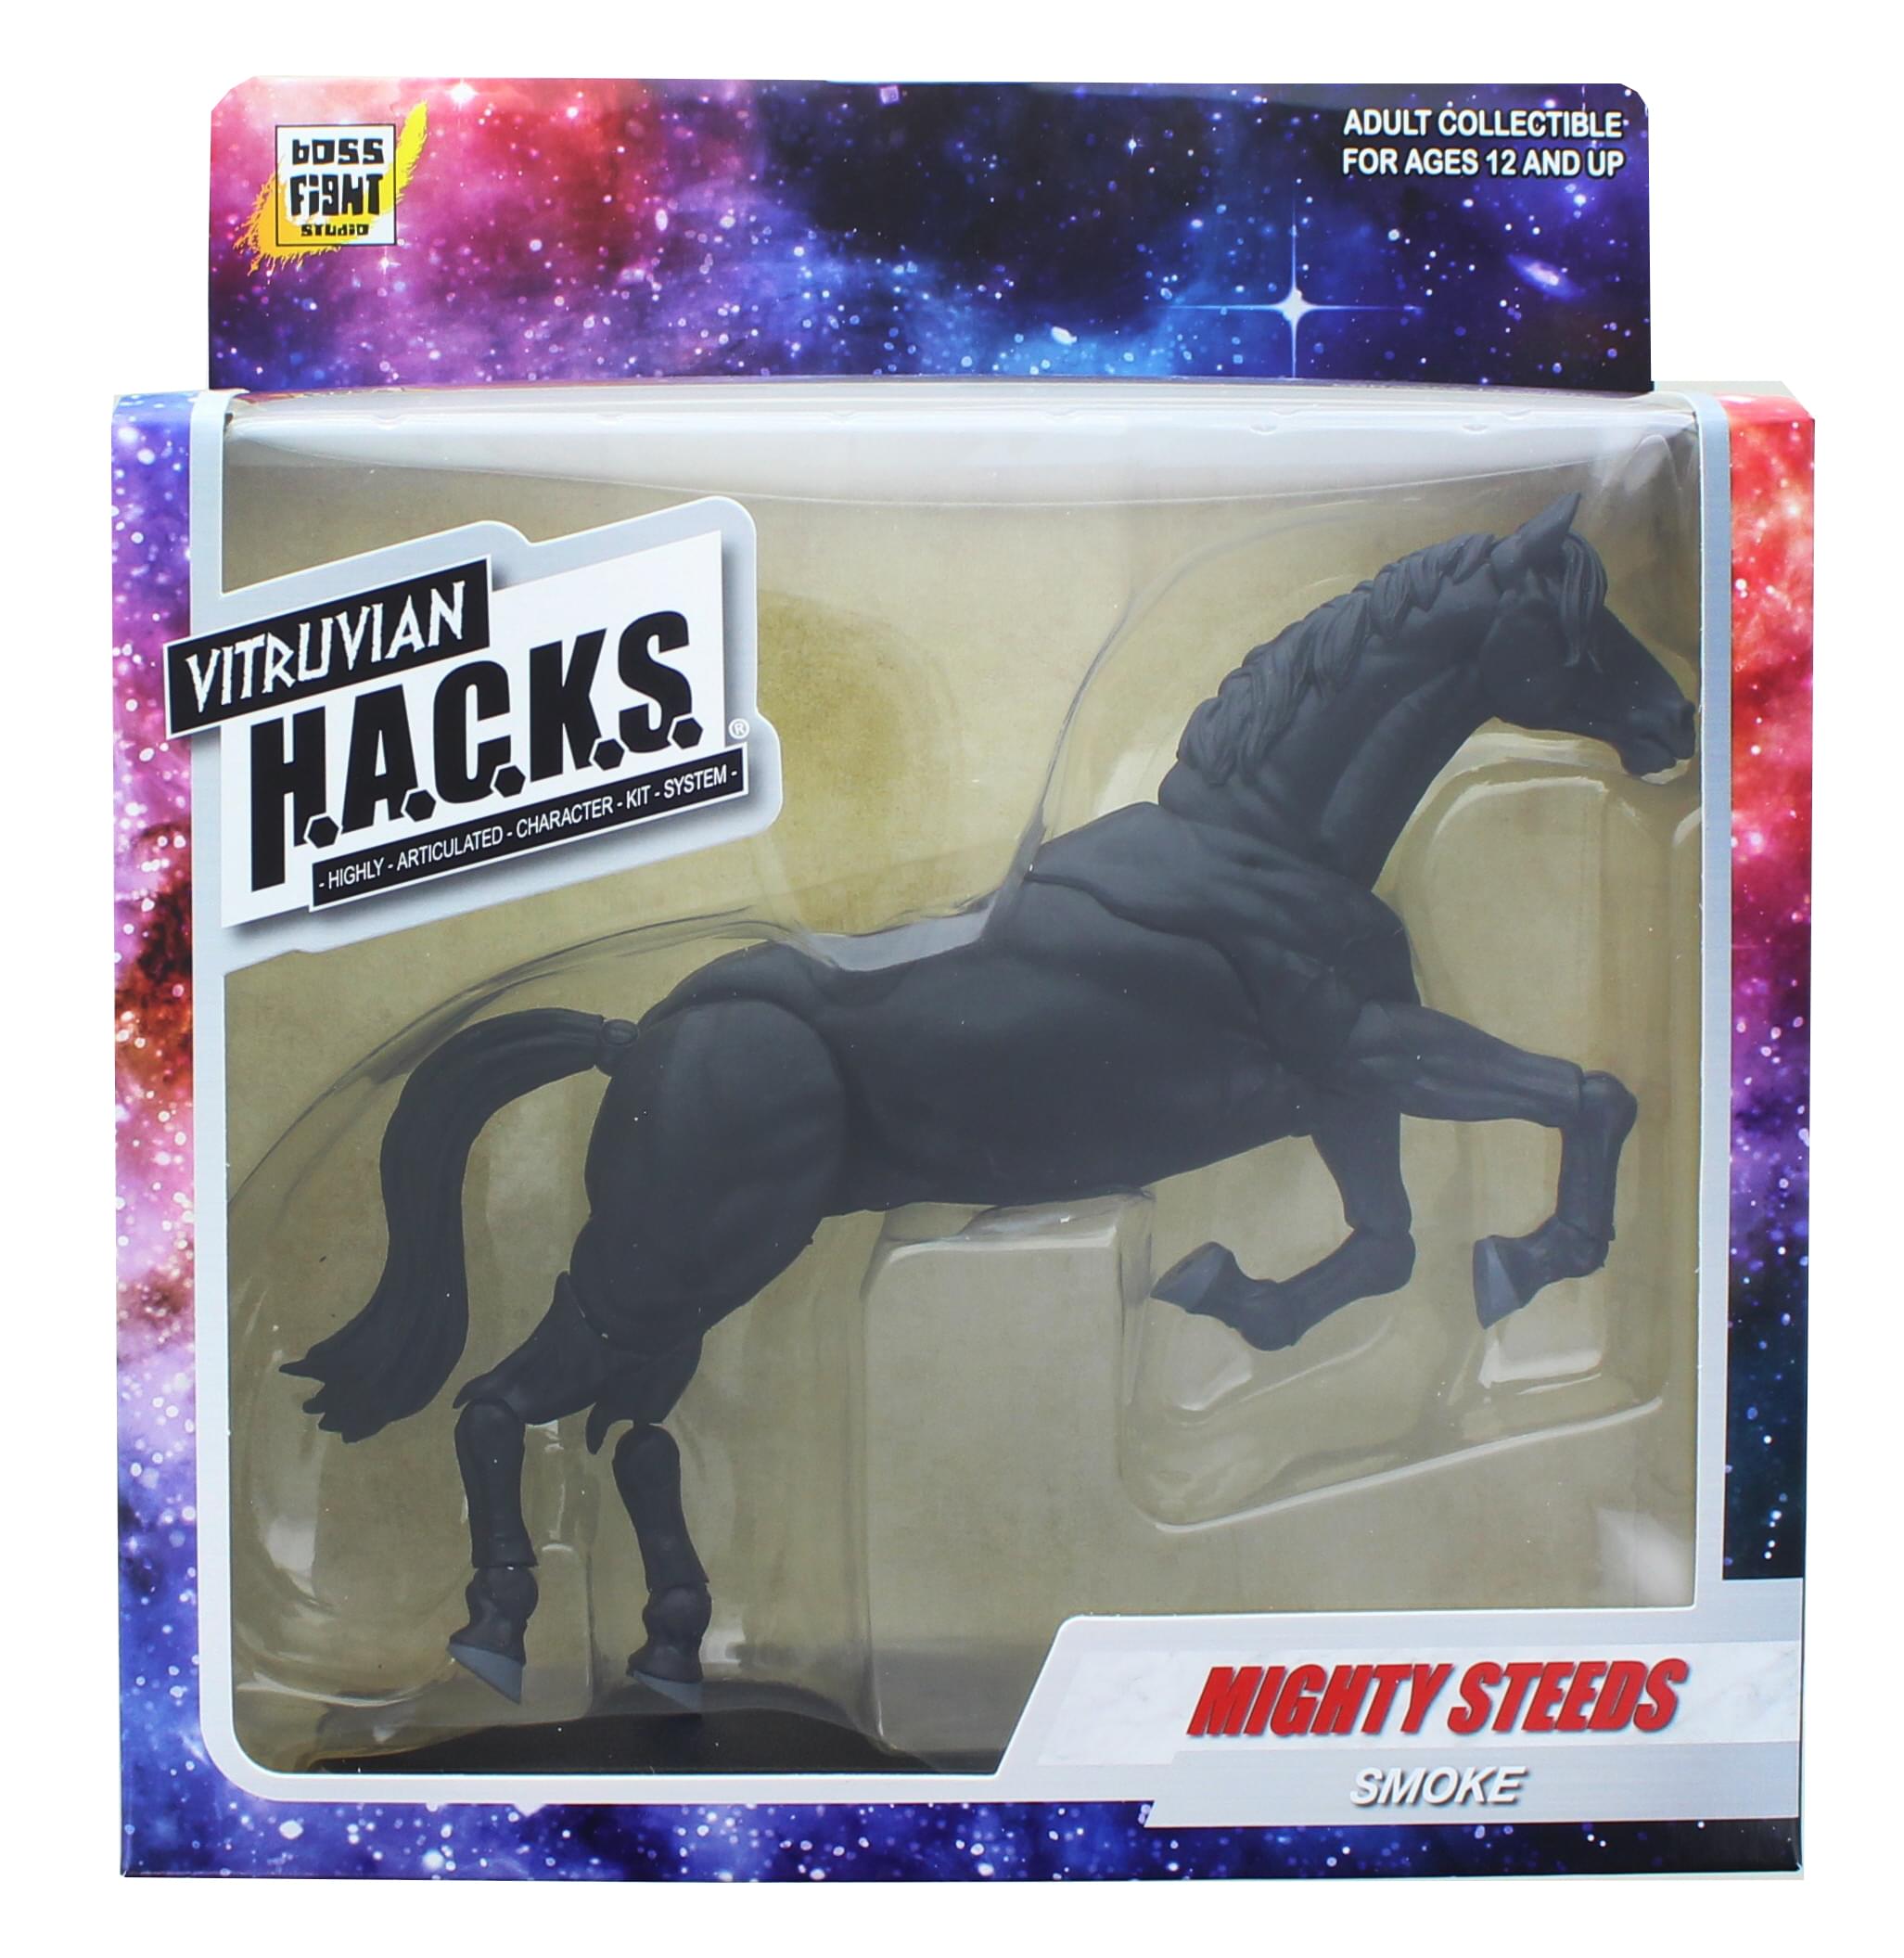 Vitruvian H.A.C.K.S. Mighty Steeds Action Figure Mount , Smoke (Black Horse)